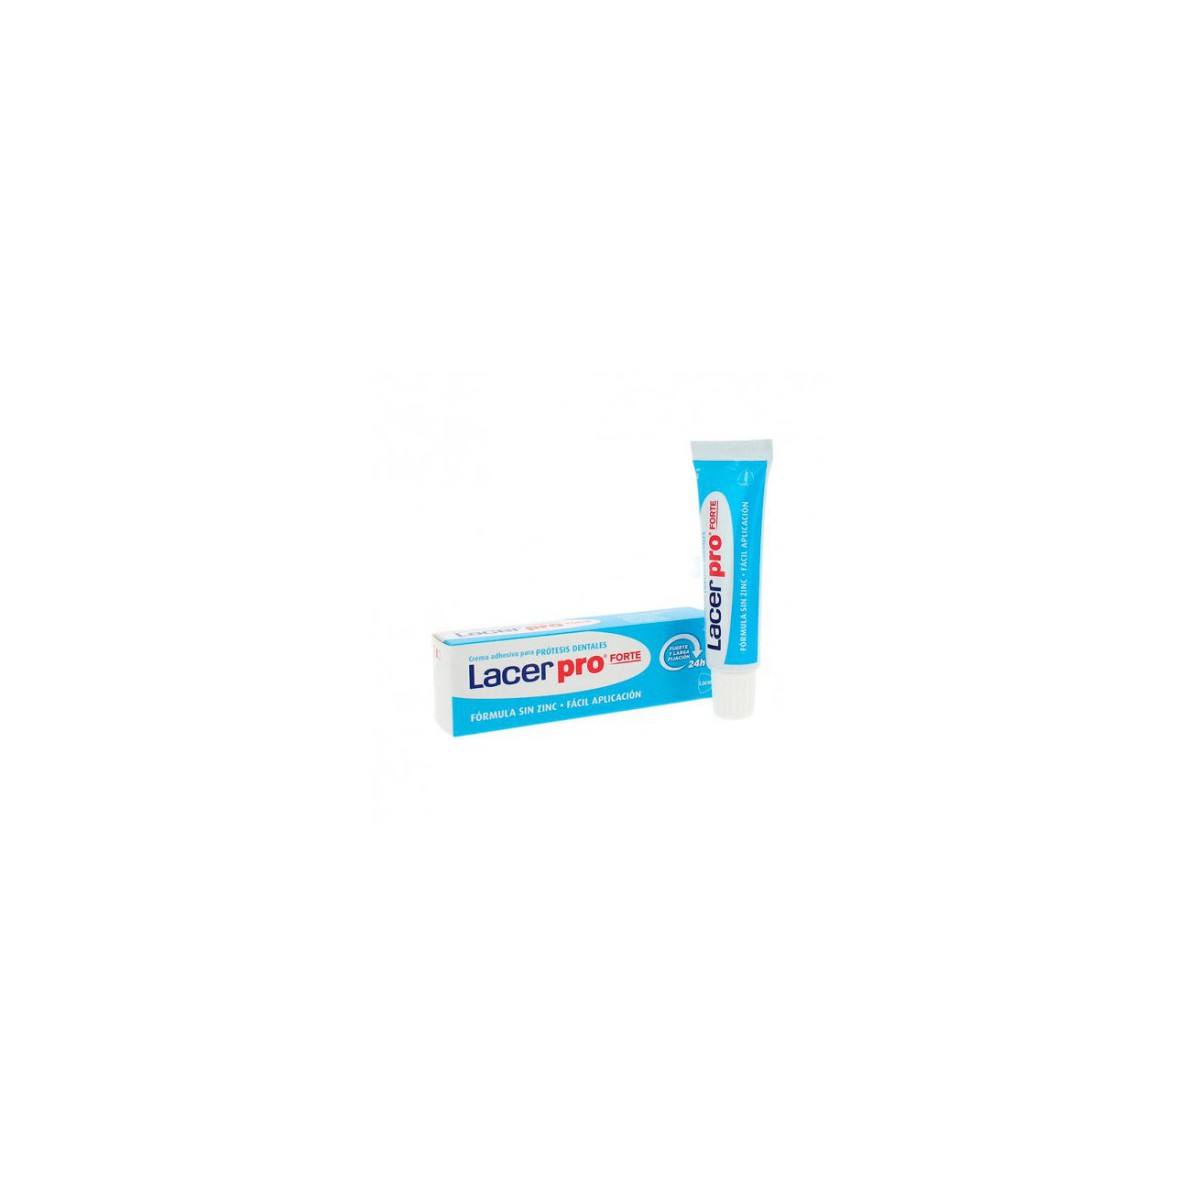 Lacer Pro Forte Crema Adhesiva 70 gr